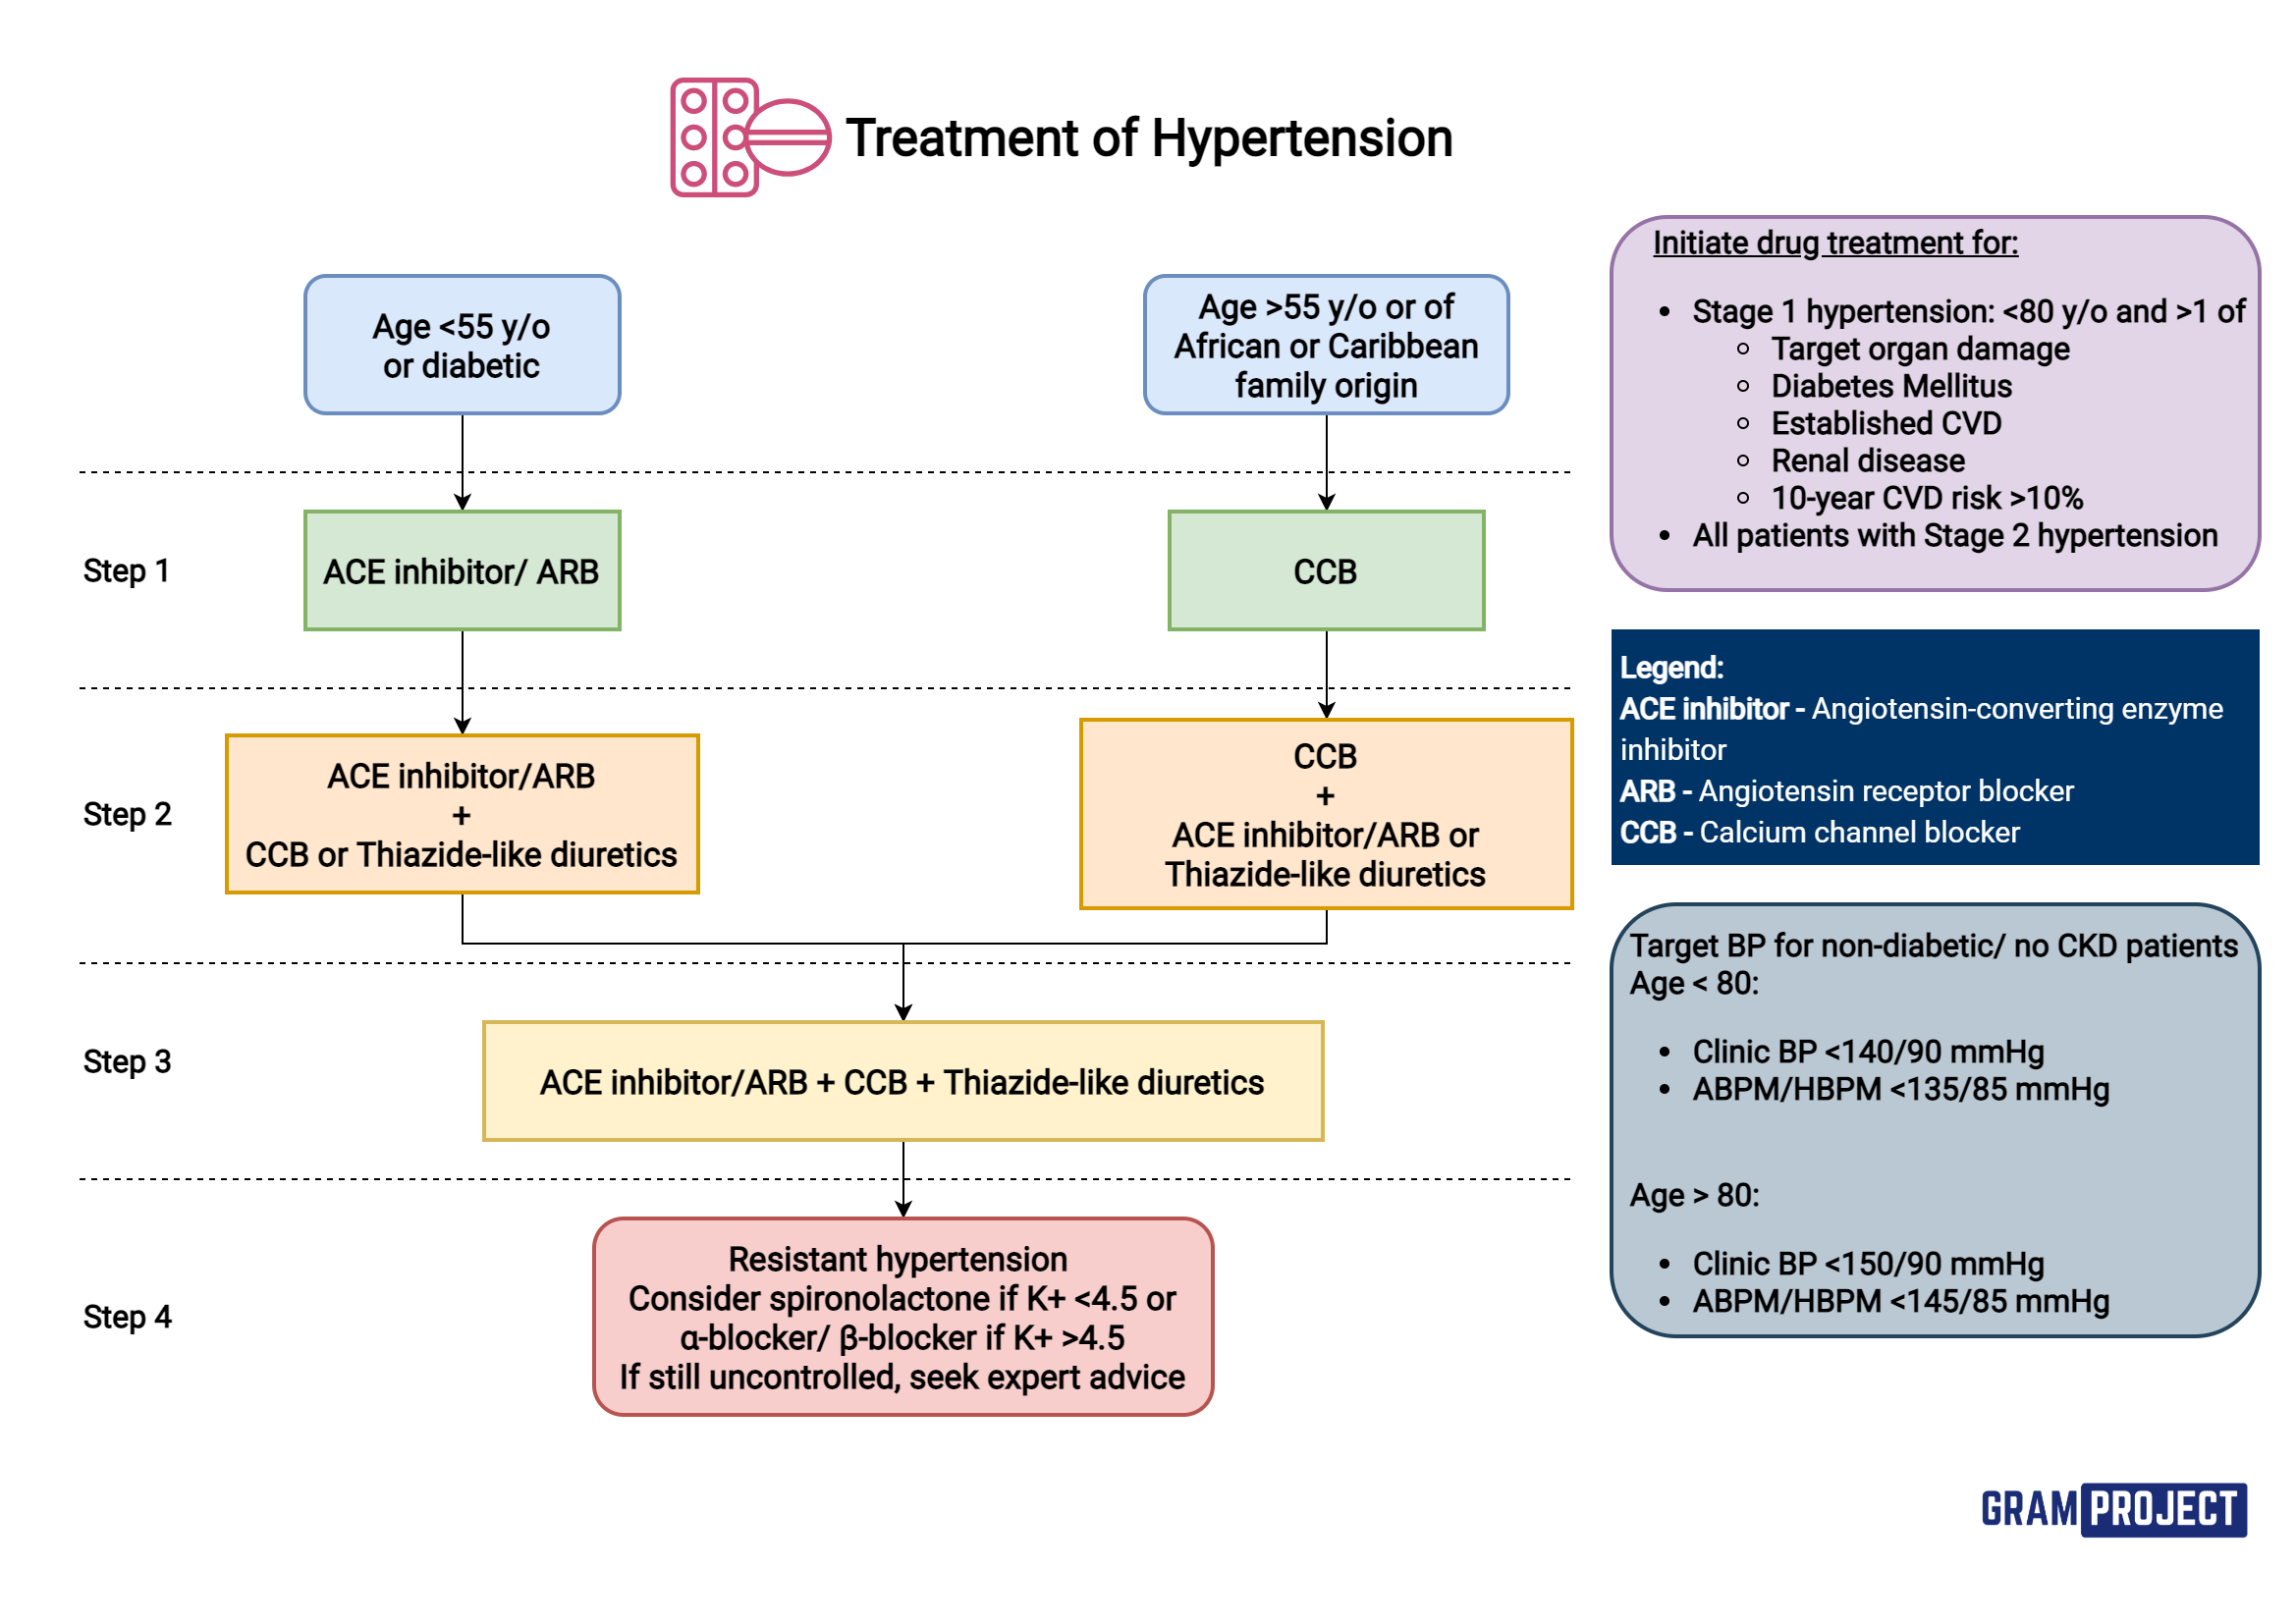 Treatment for hypertension flowchart based on NICE guidelines